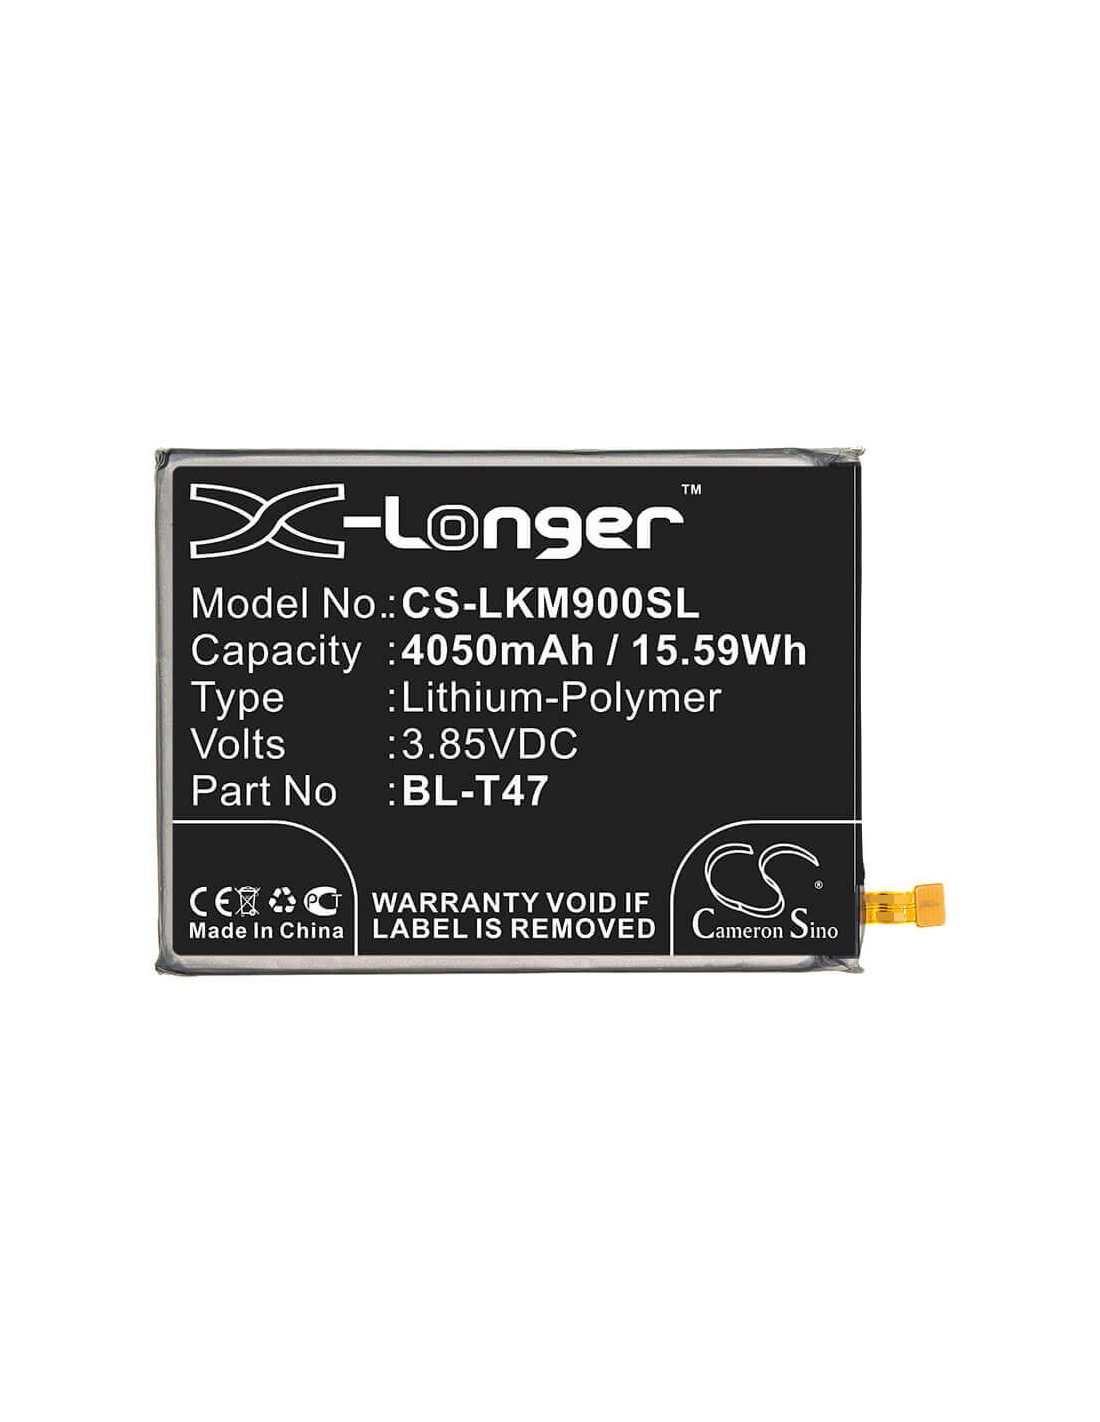 Battery for Lg, G900, G900em, G900emw 3.85V, 4050mAh - 15.59Wh